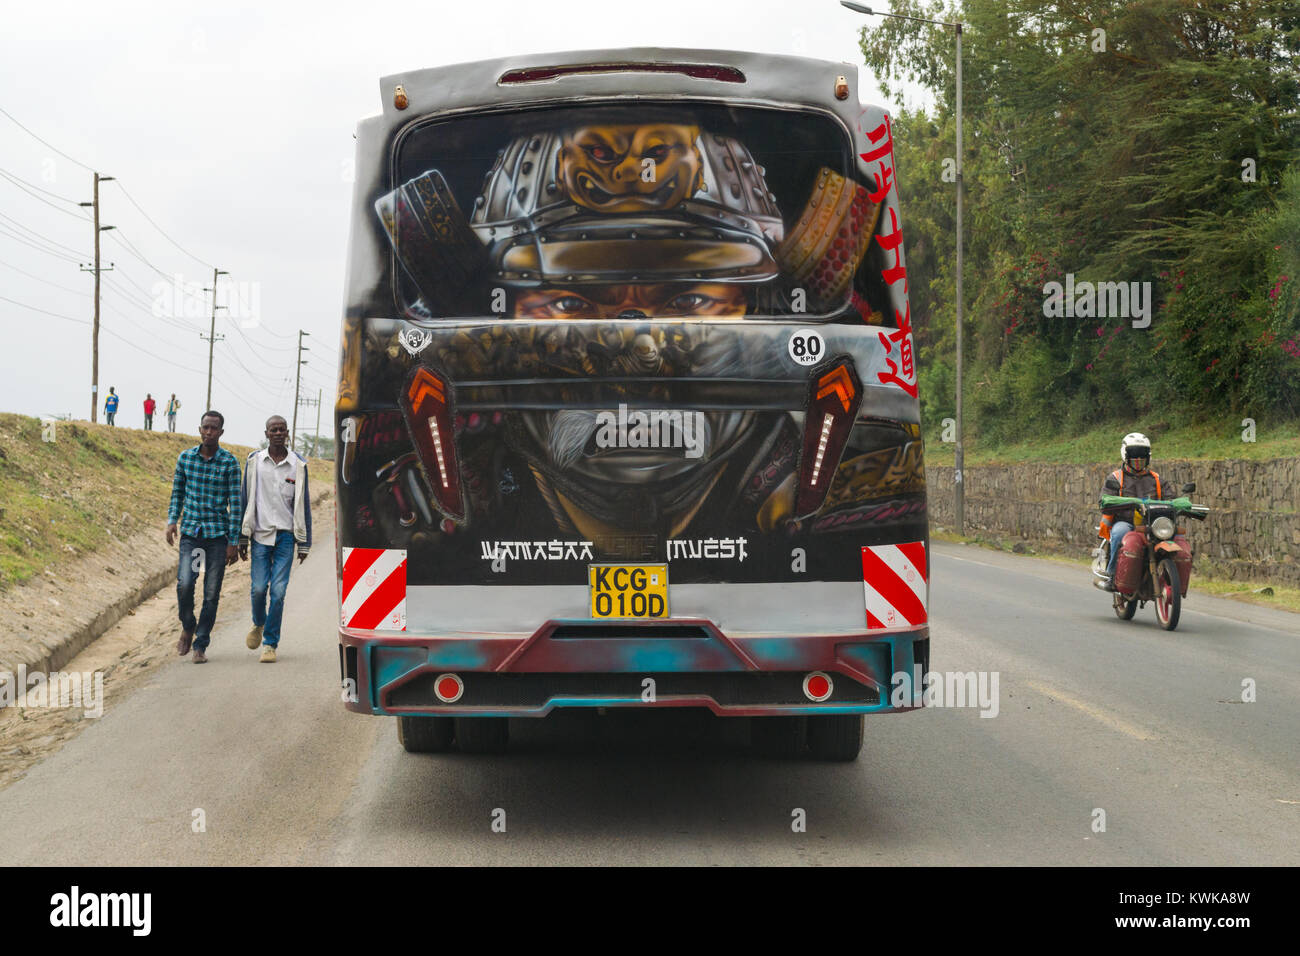 Un bus decorate con opere d'arte che raffigura un samurai giapponese, Kenya, Africa orientale Foto Stock